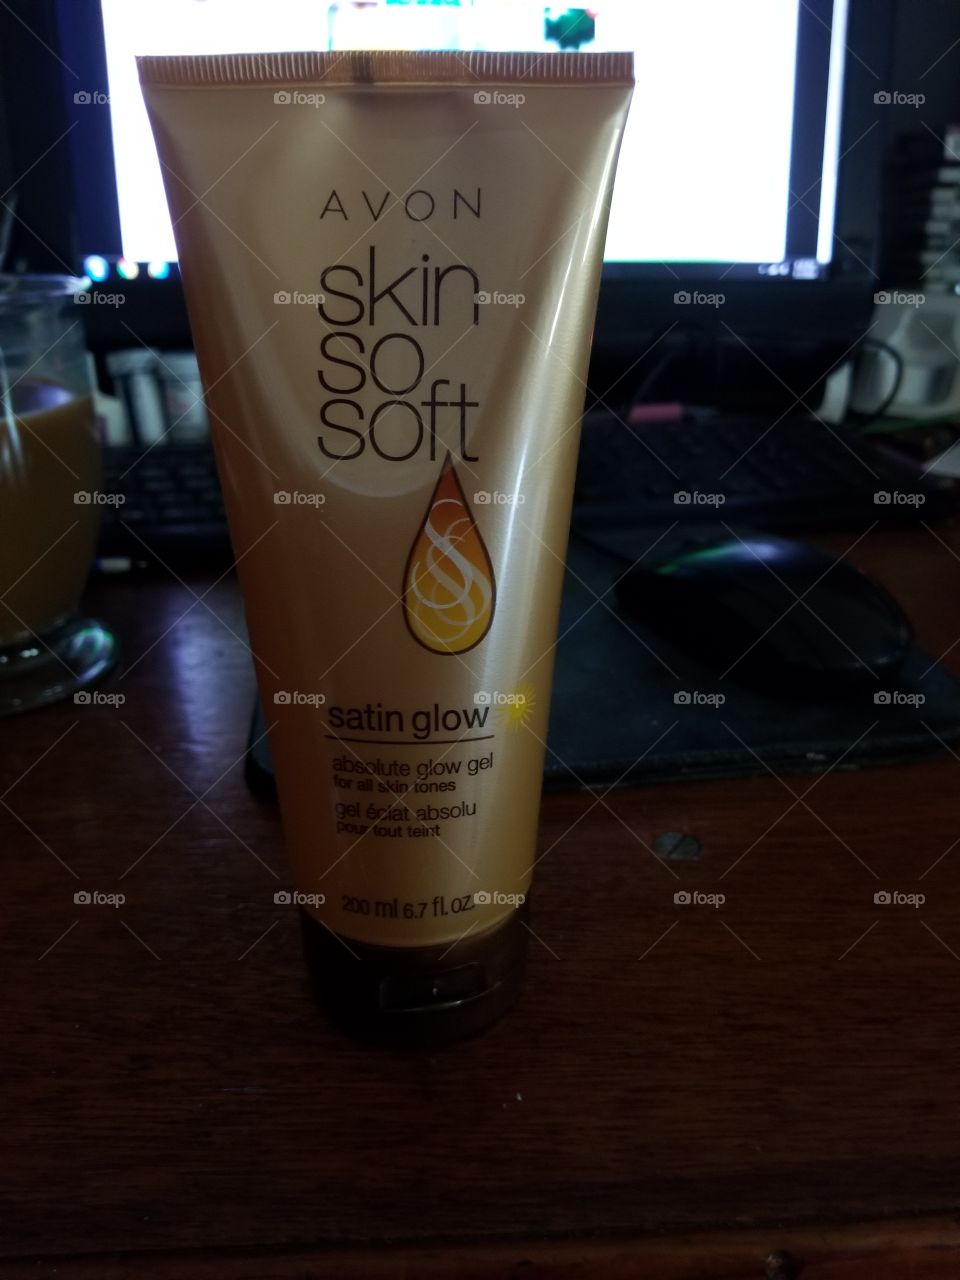 Avon skin so soft